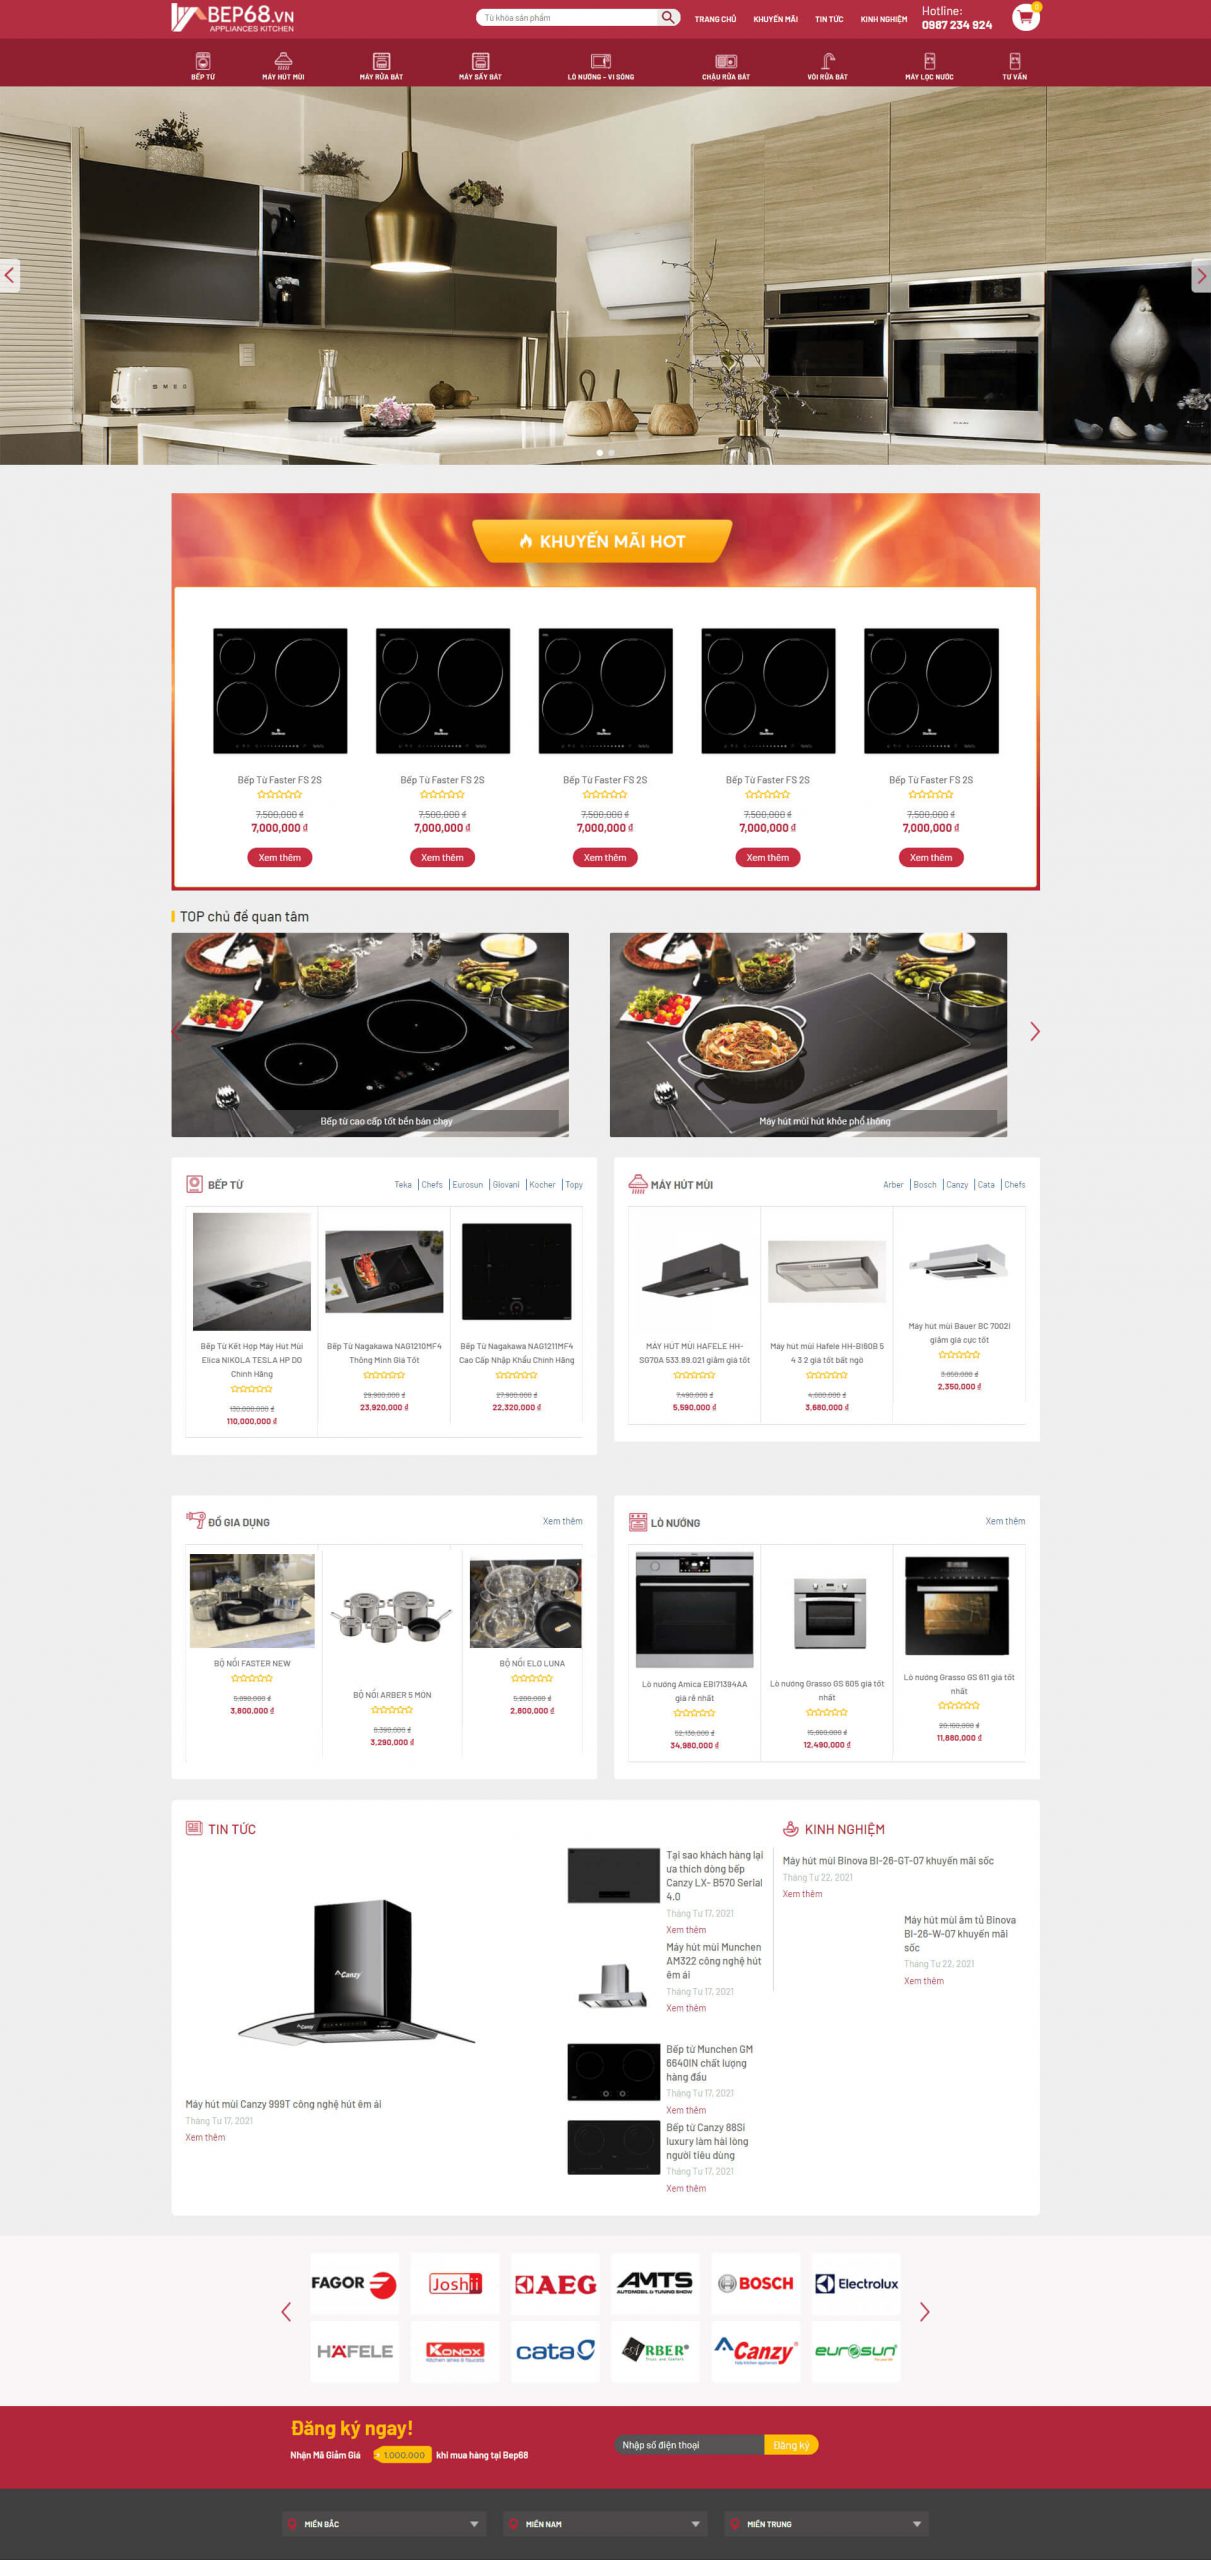 Thiết kế website ngành bếp - Bep68.com